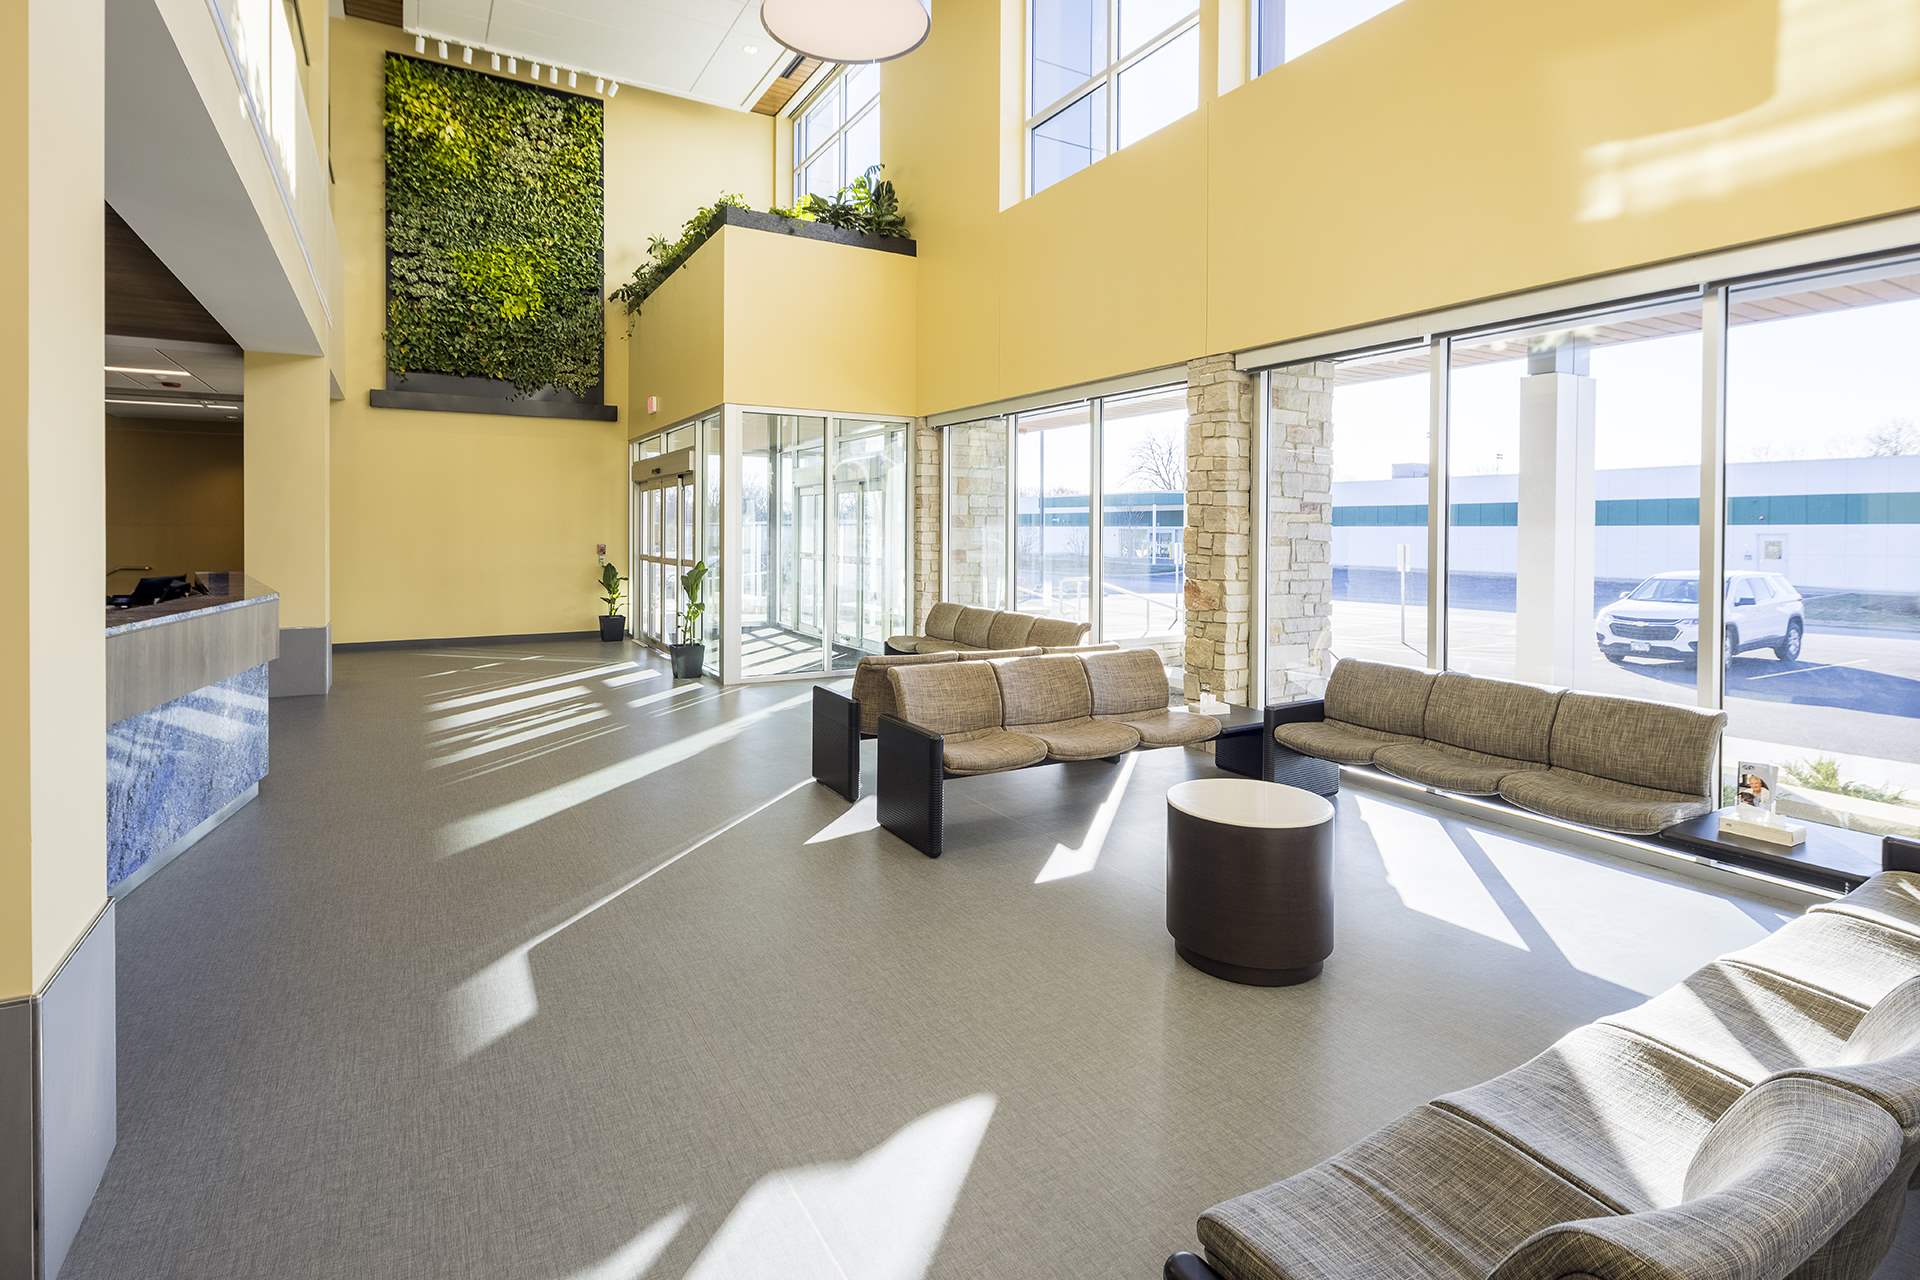 Altro flooring installed in reception area of vet clinic